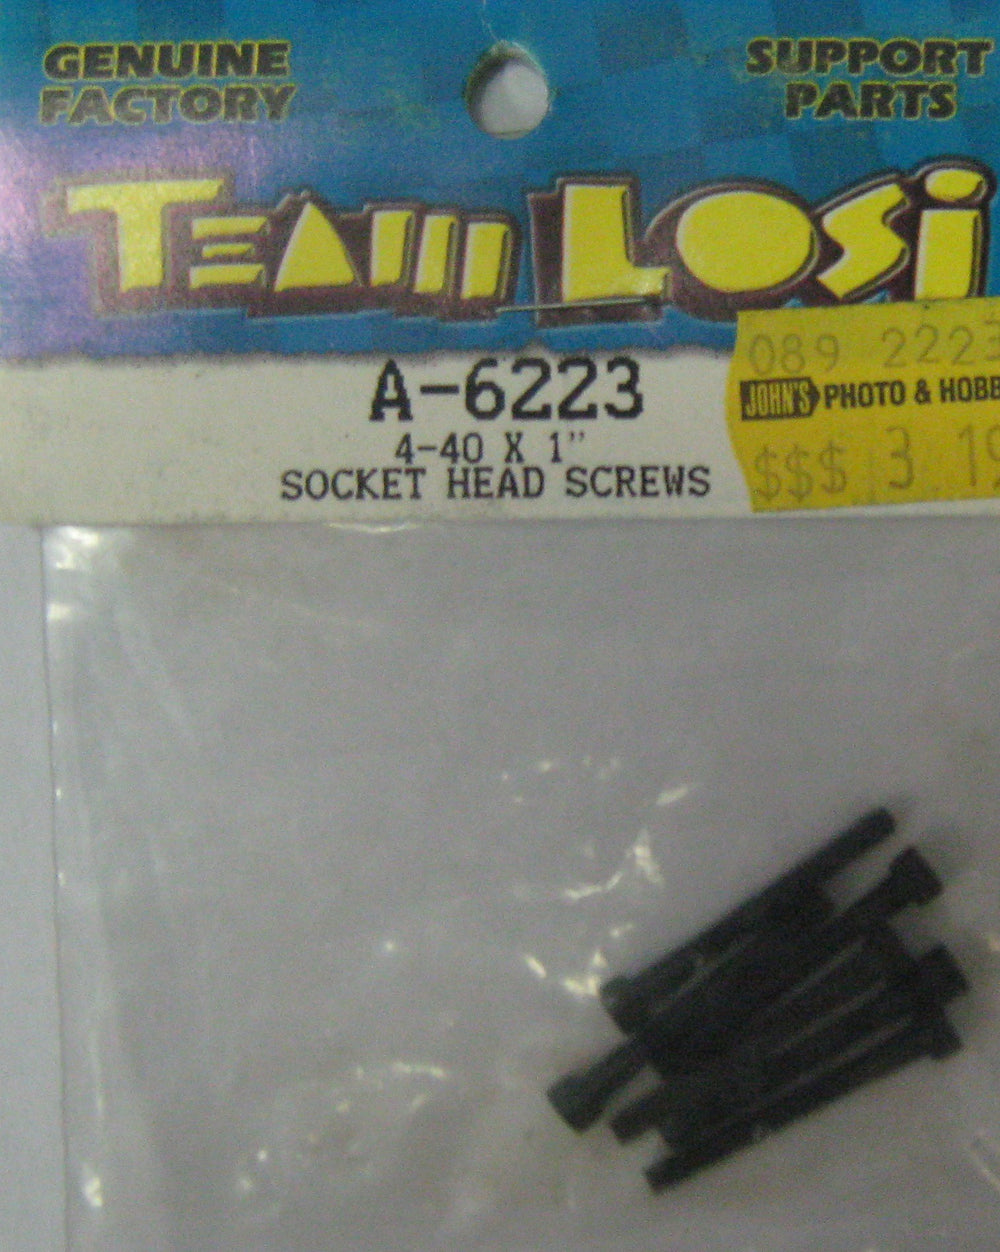 TEAM LOSI # A-6223 - SOCKET HEAD SCREWS - 4-40 X 1